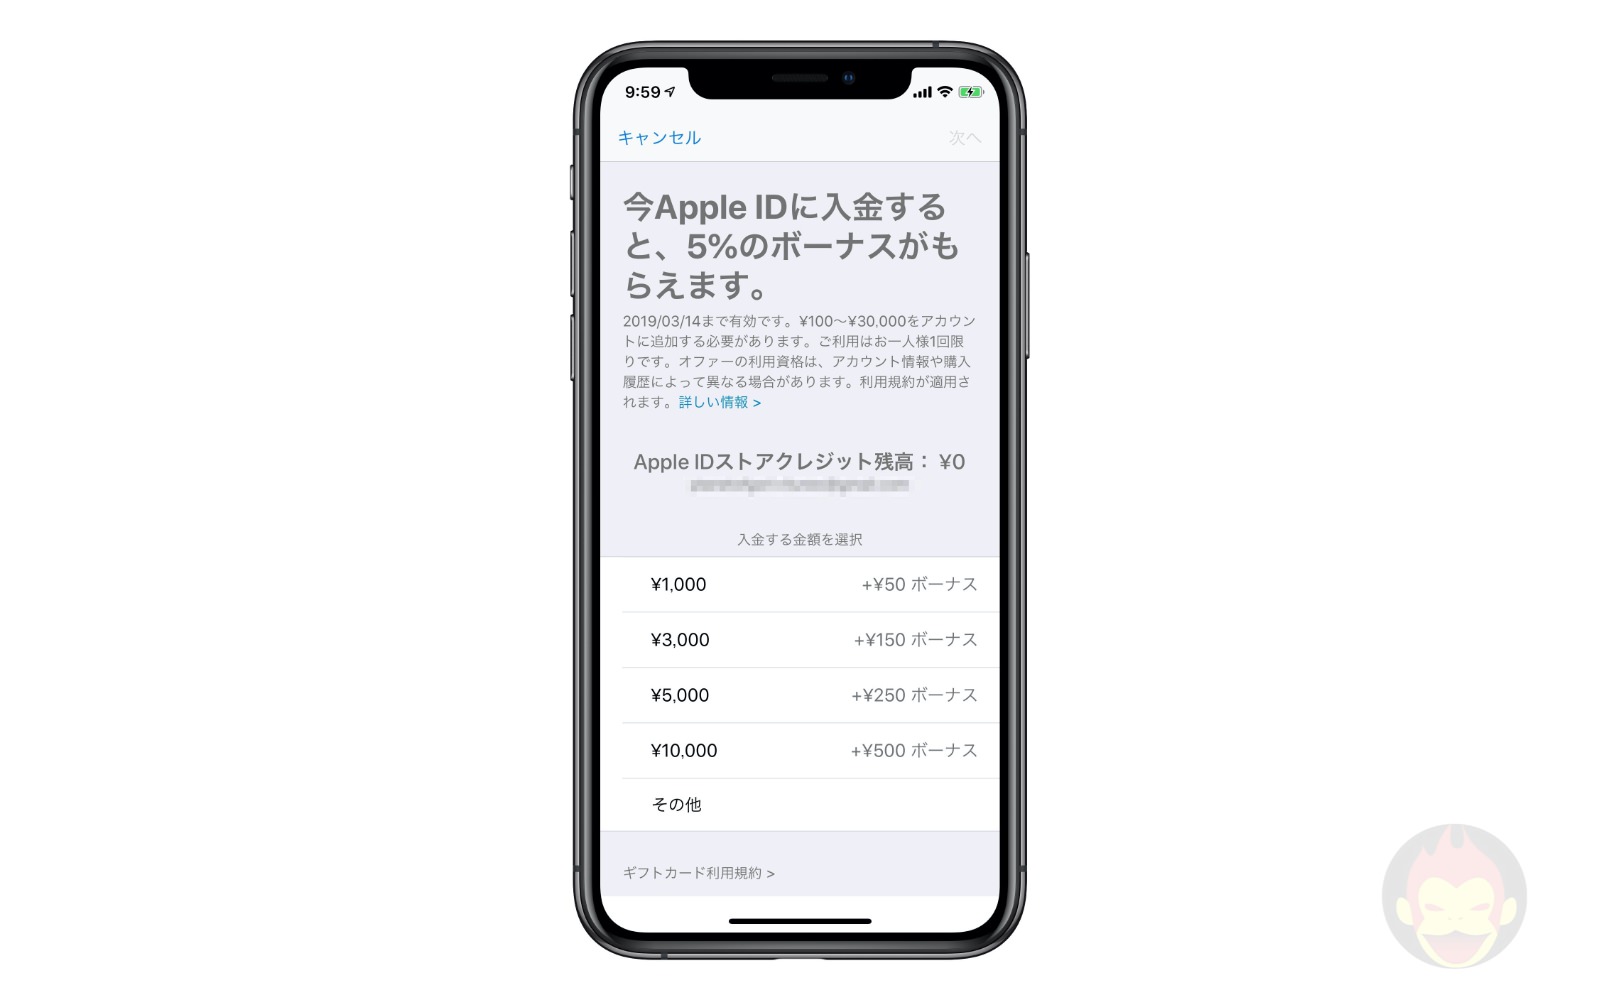 Apple-ID-Charge-5percent-campaign-01.jpg